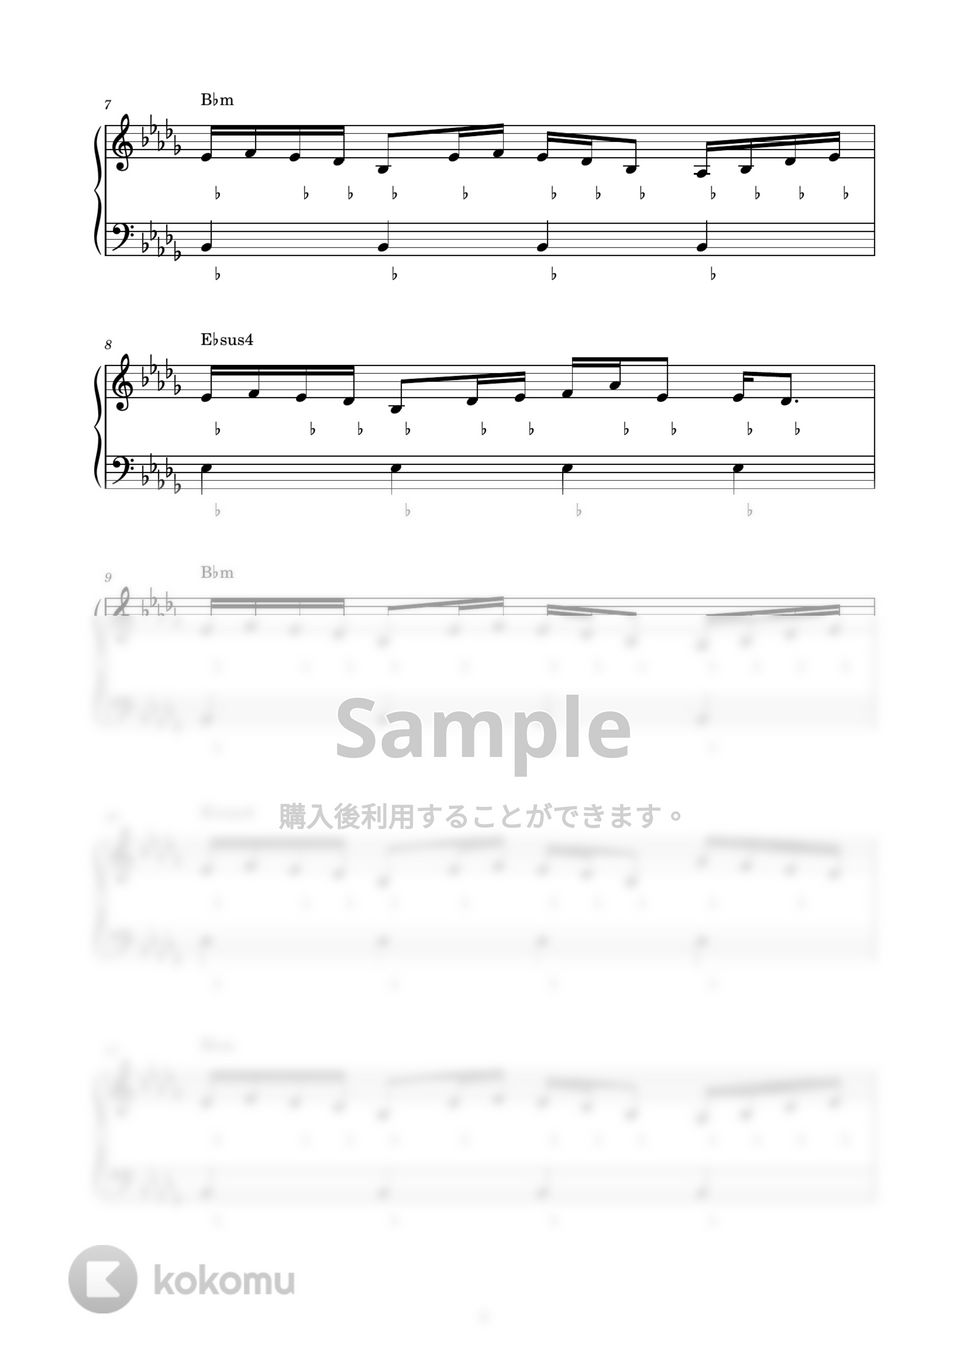 LiSA - 一斉ノ喝采 (ピアノ楽譜 / かんたん両手 / 歌詞付き / ドレミ付き / 初心者向き) by piano.tokyo